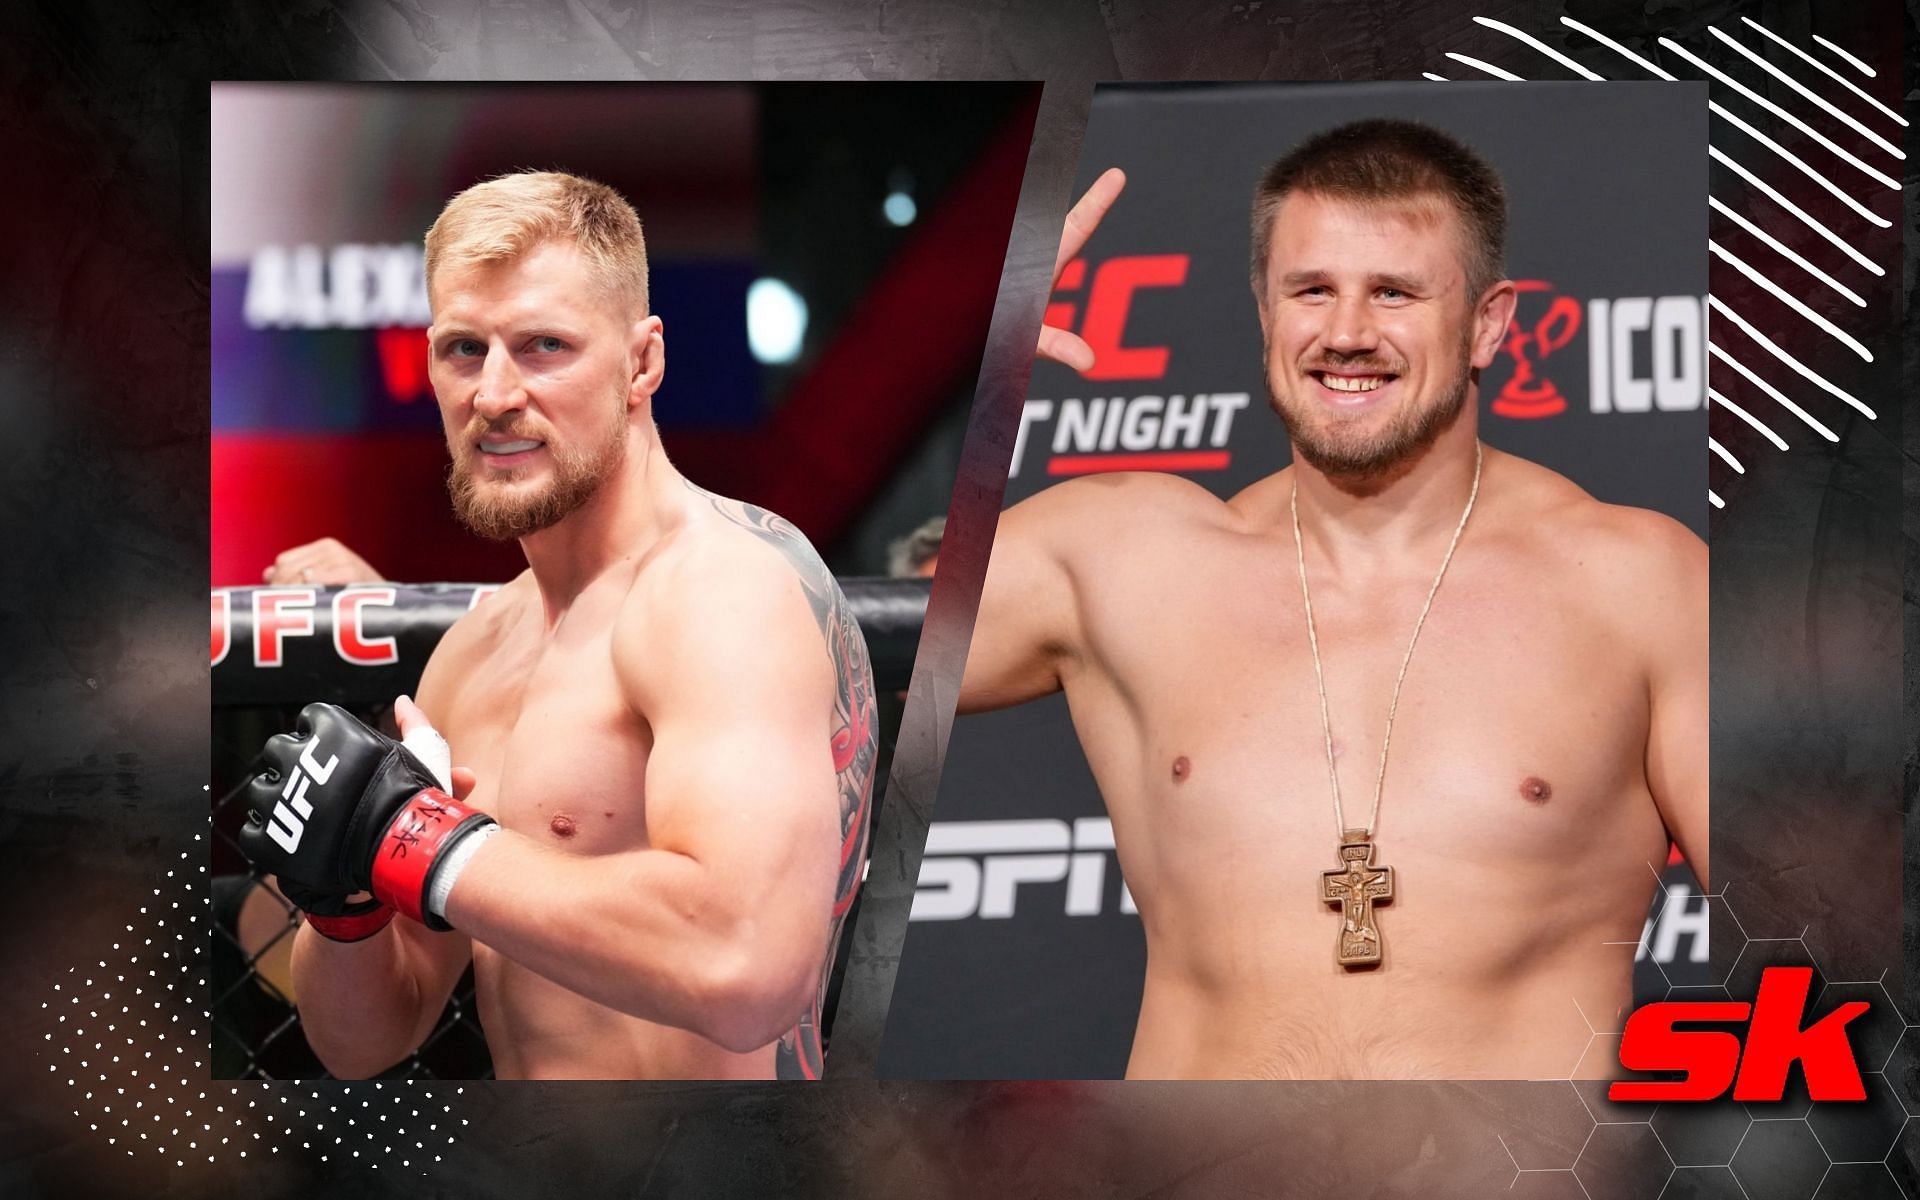 lexander Volkov set to meet Alexandr Romanov in heavyweight clash at UFC event in March